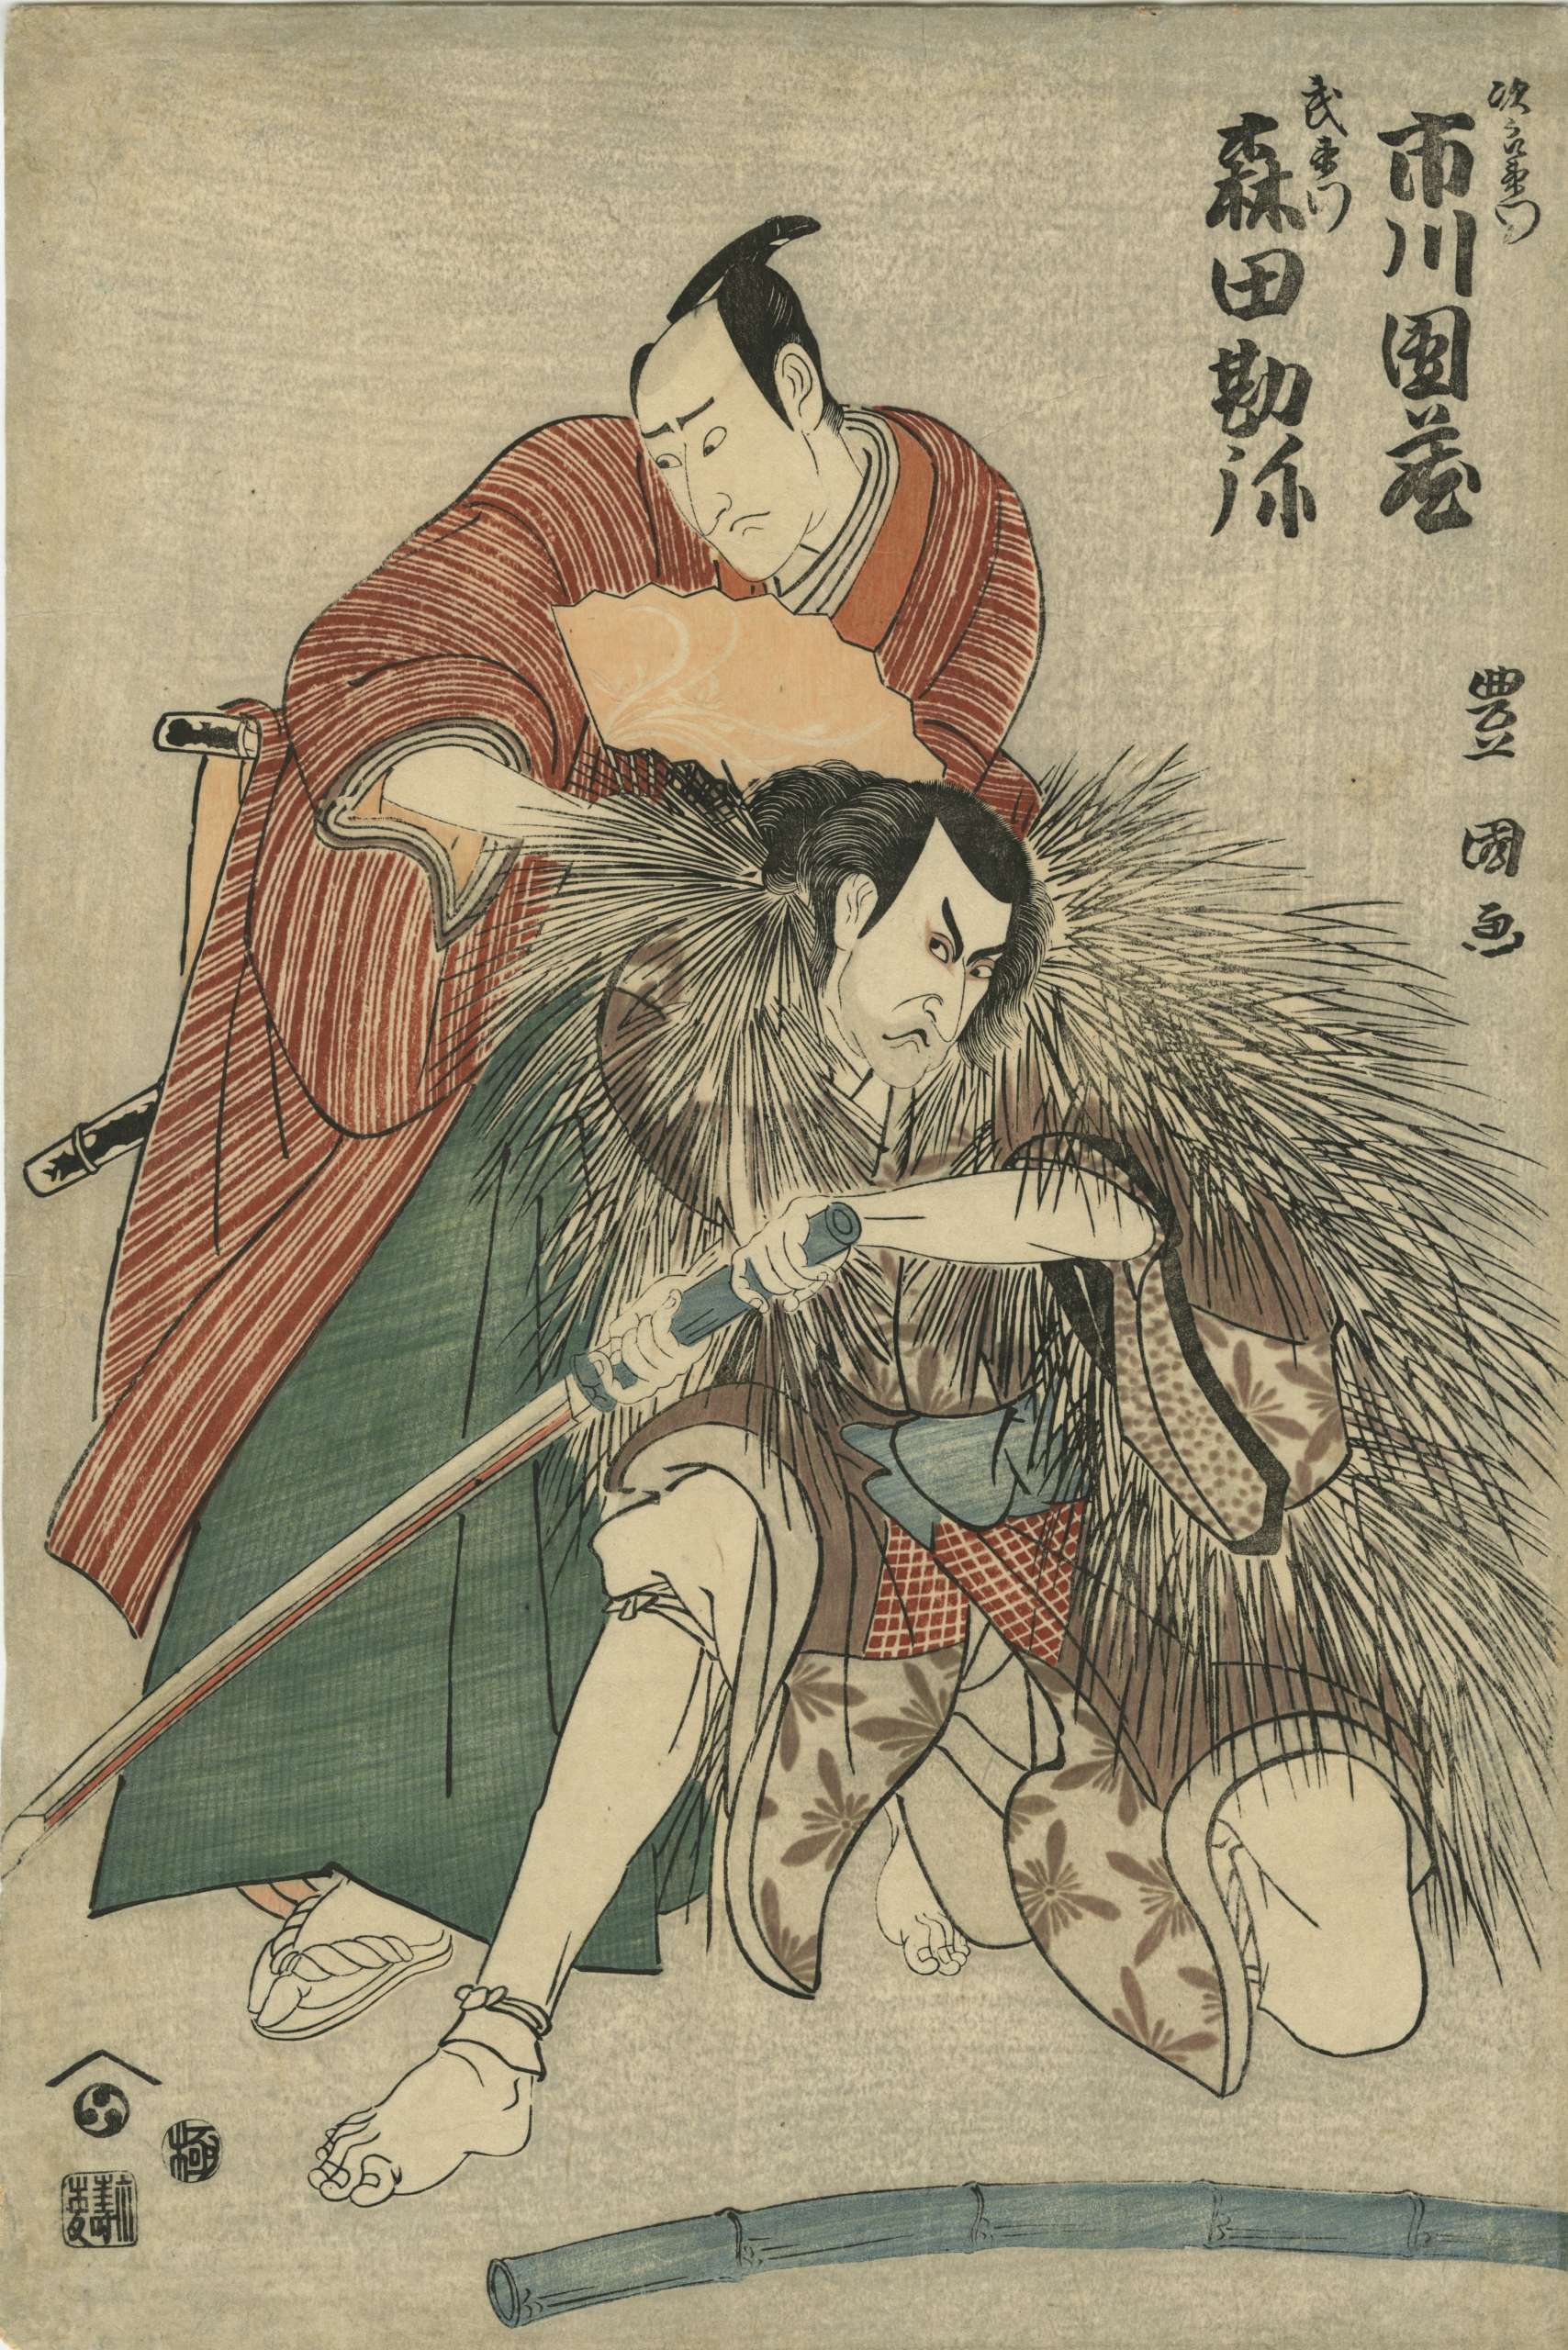 Utagawa Toyokuni I. Actors Ichikawa Danzo IV as Jiroemon and Morita Kanya VIII as Buemon. 1798.